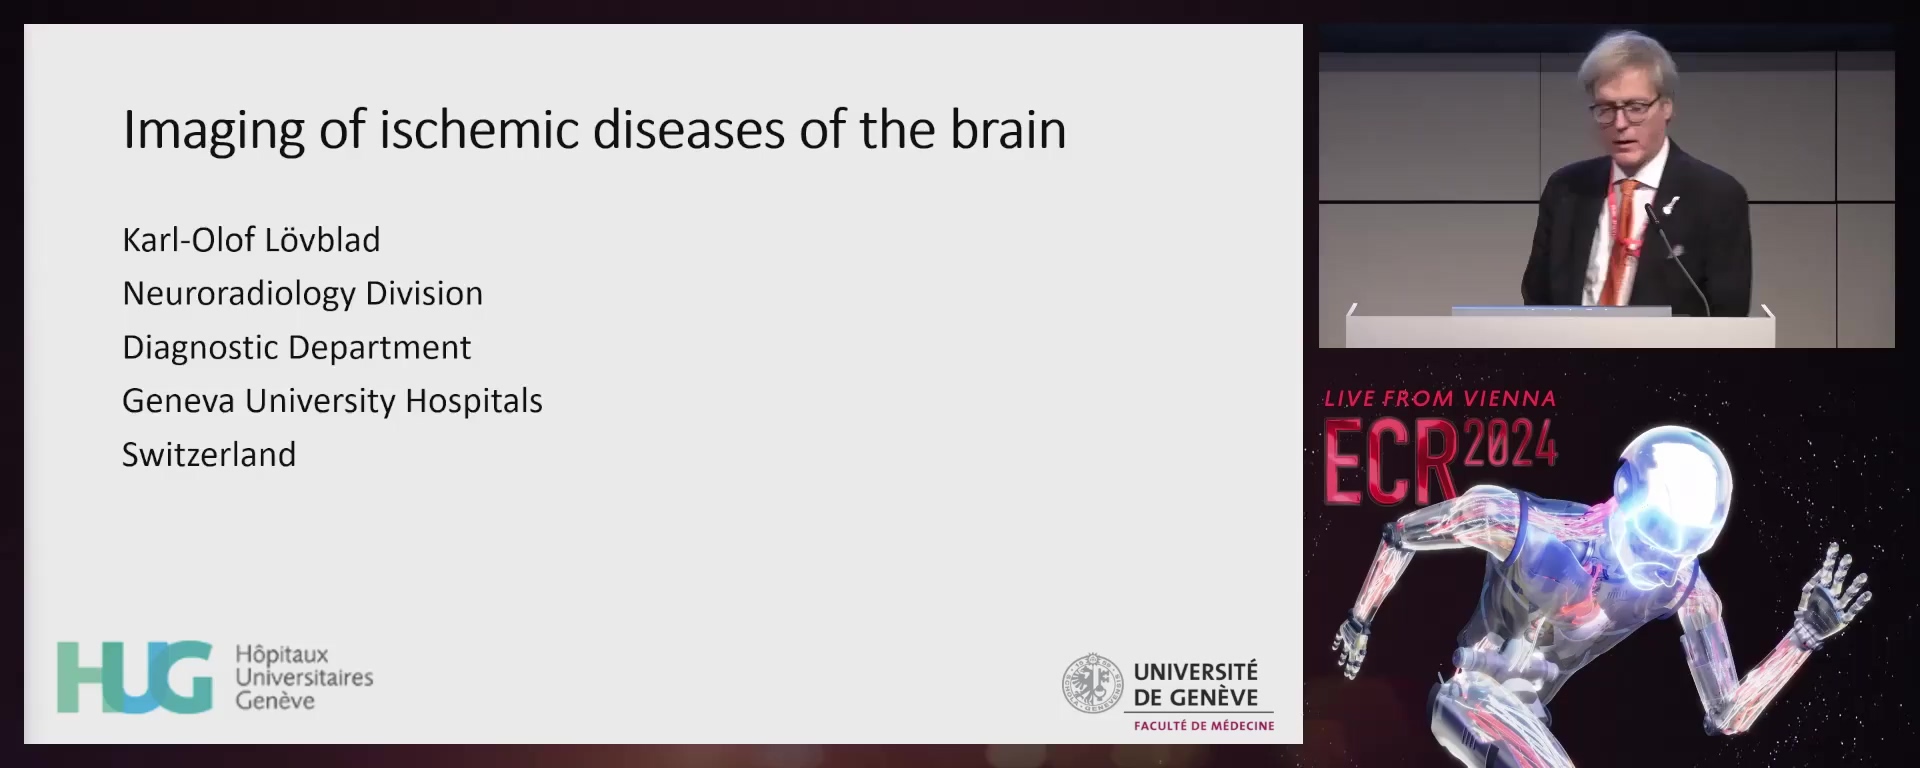 Imaging of ischaemic diseases of the brain